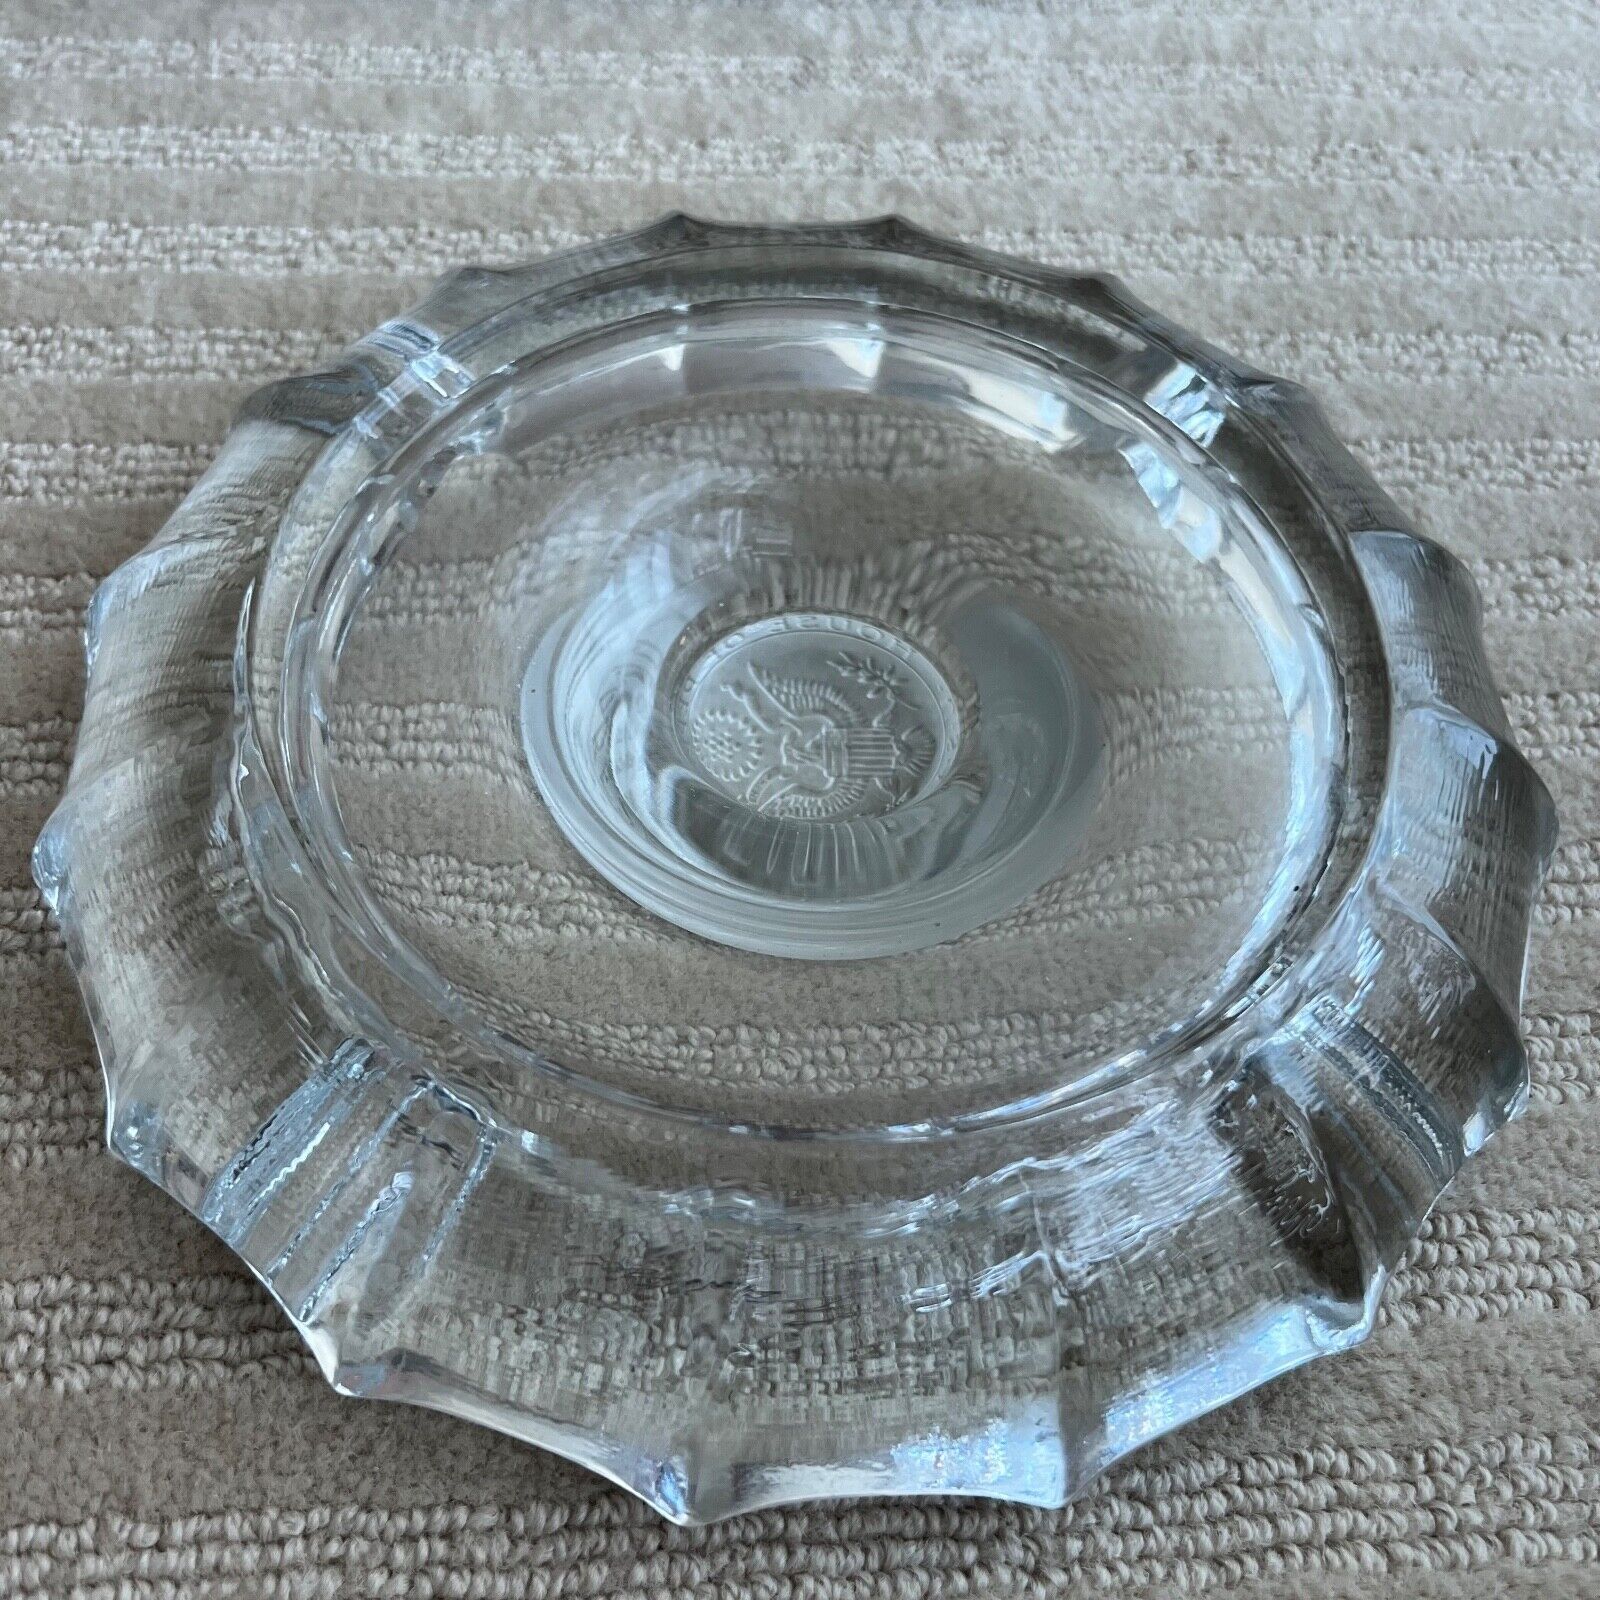 House of Representatives Official USA glass ashtray, 7.5" round, vintage Без бренда - фотография #5